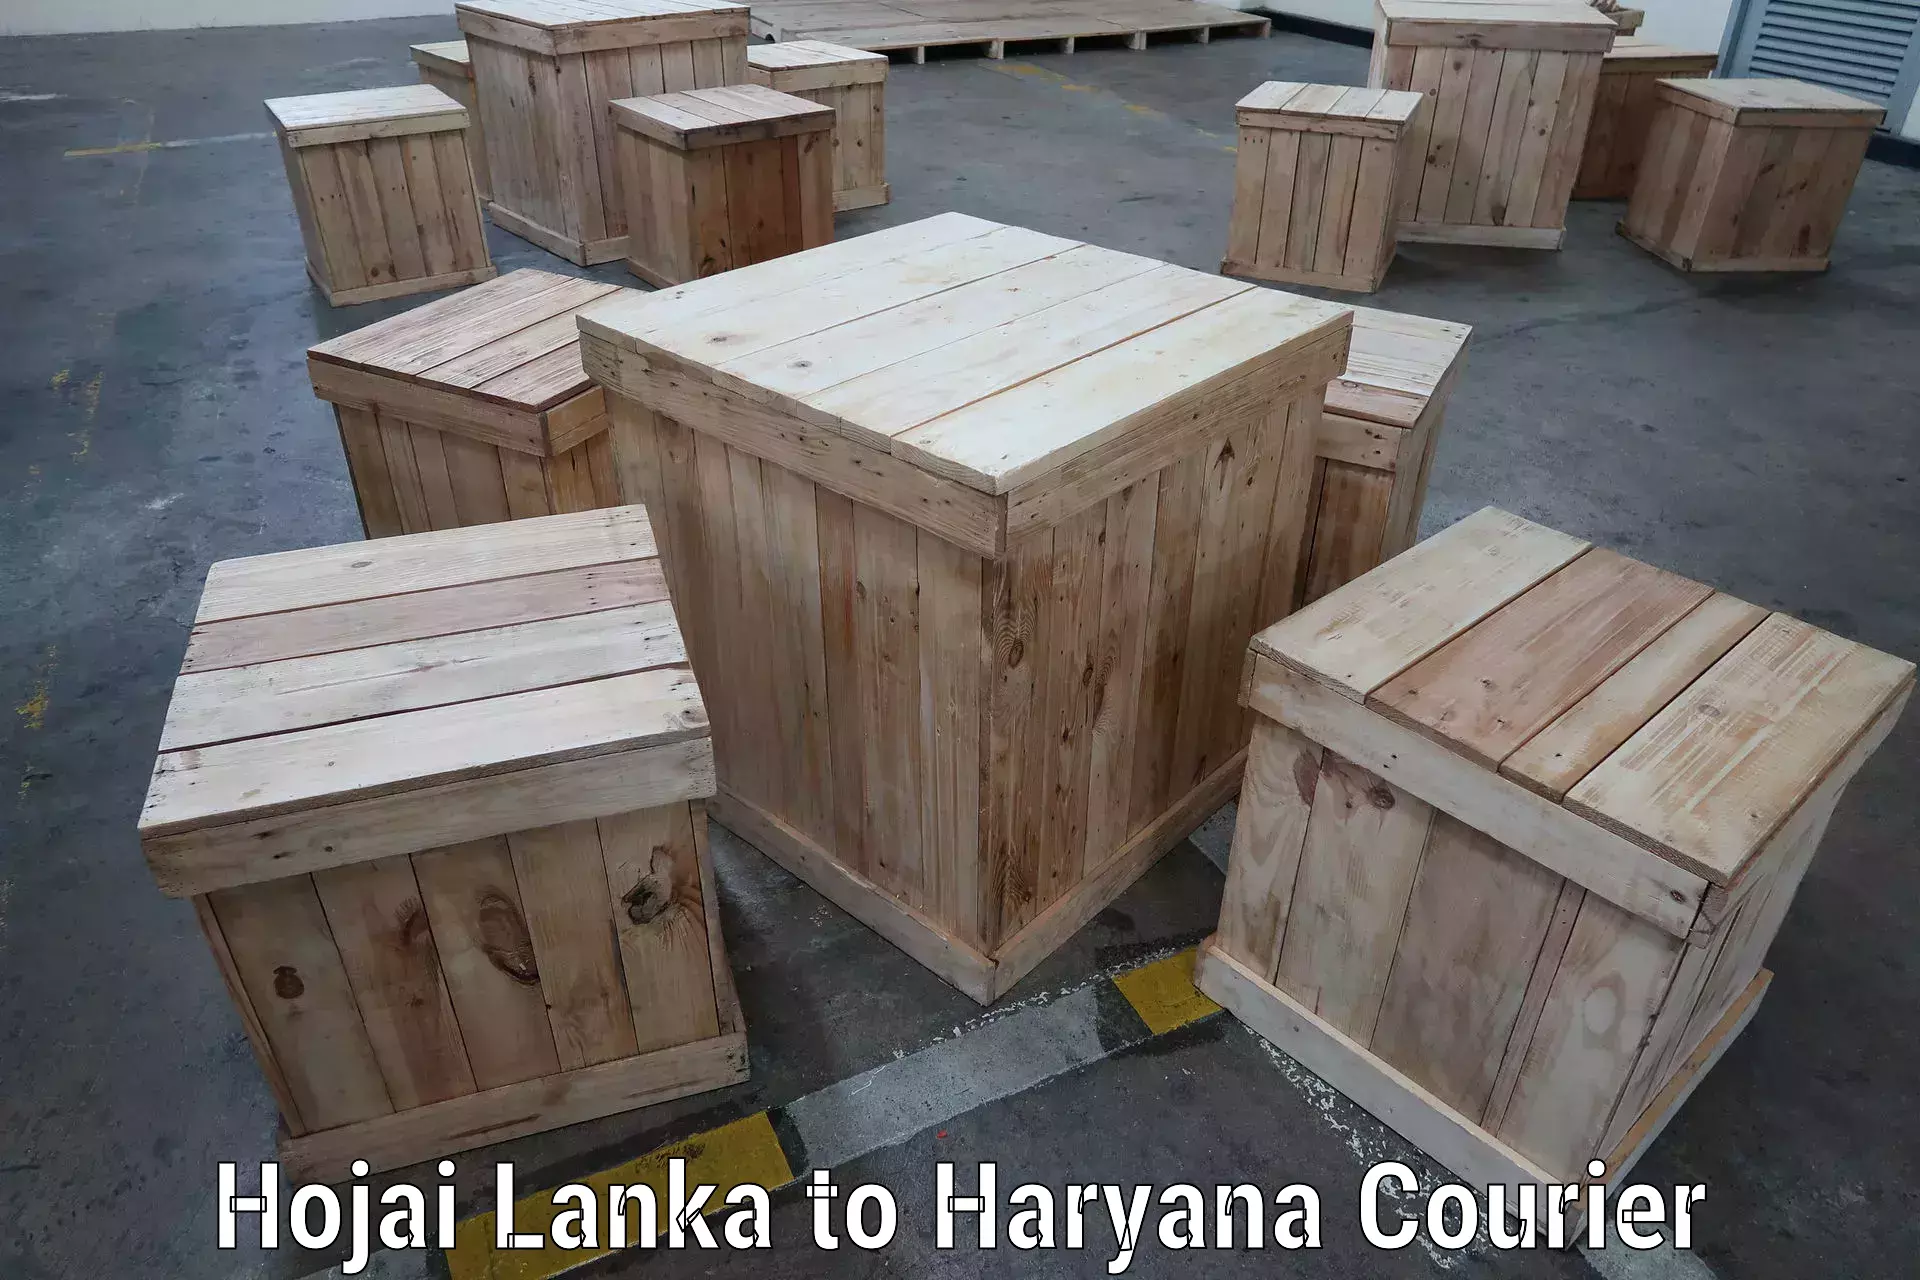 Ocean freight courier Hojai Lanka to Haryana